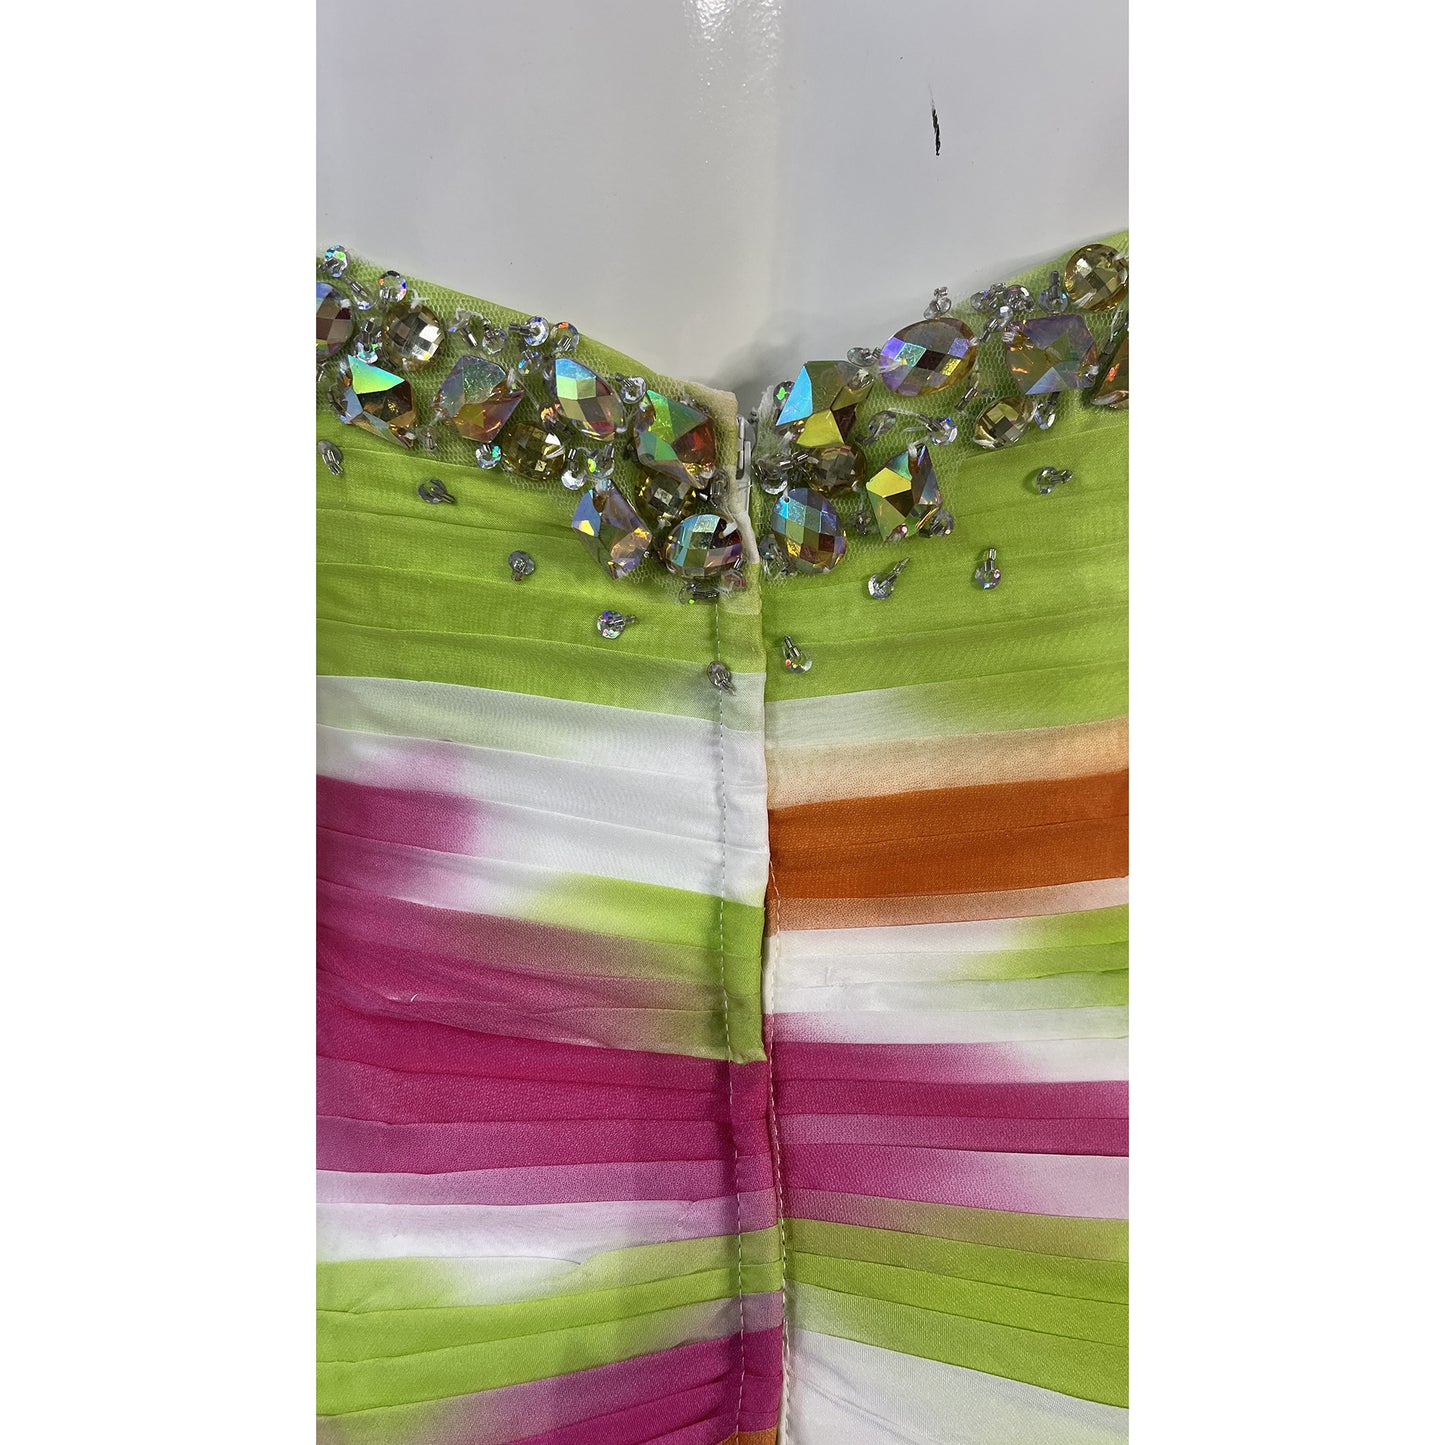 Tiffany Designs Gown Strapless Rhinestone Embellished Lime, Orange, Pink, White Size 10 SKU 000379-1